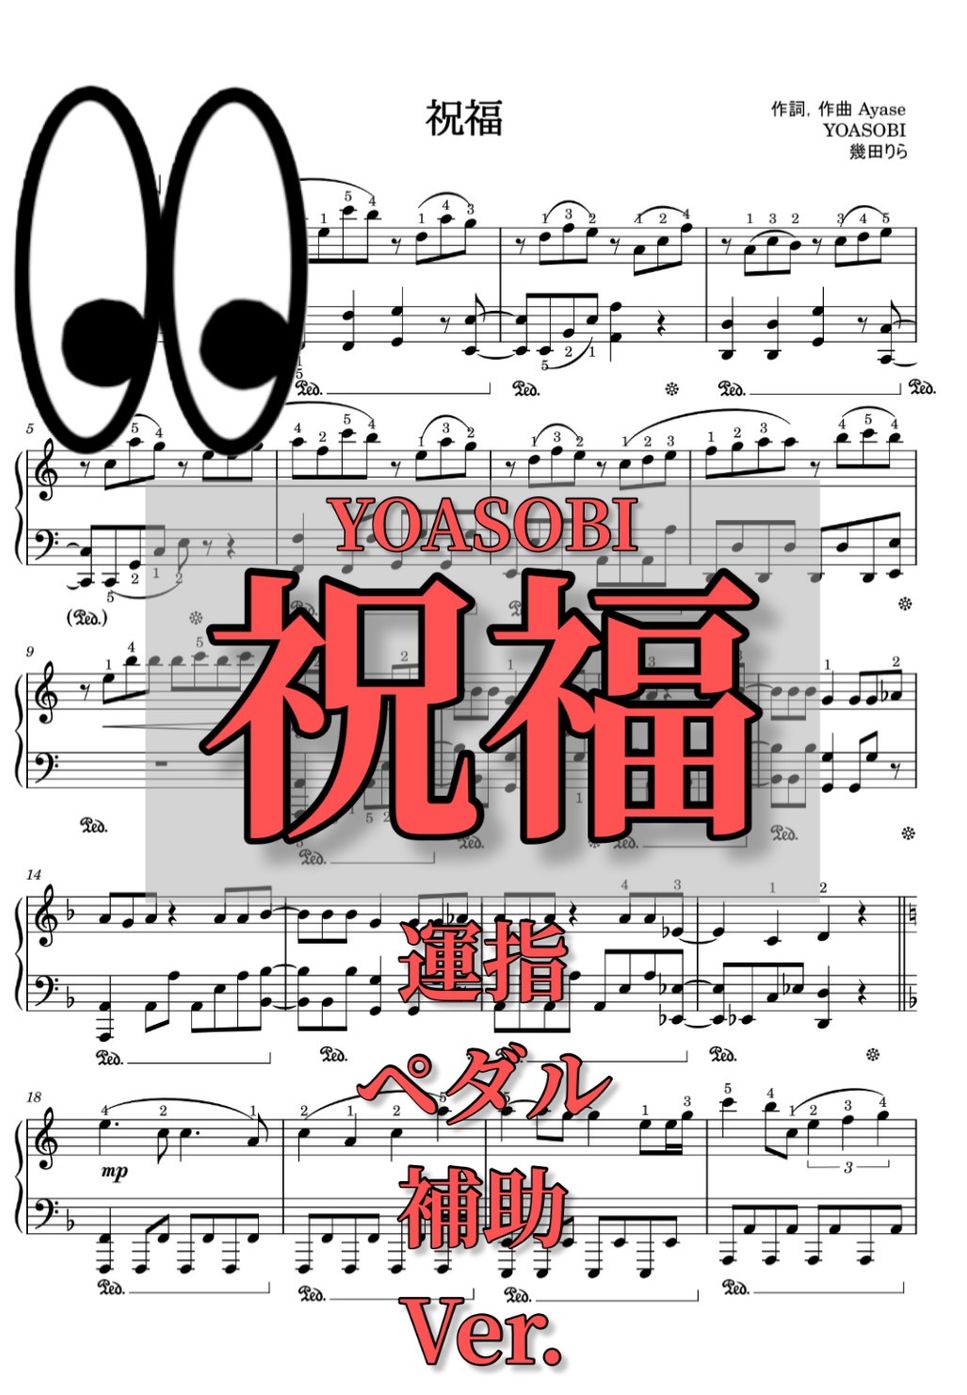 YOASOBI - 【初級補助アリ】祝福 (水星の魔女) by uRuMI